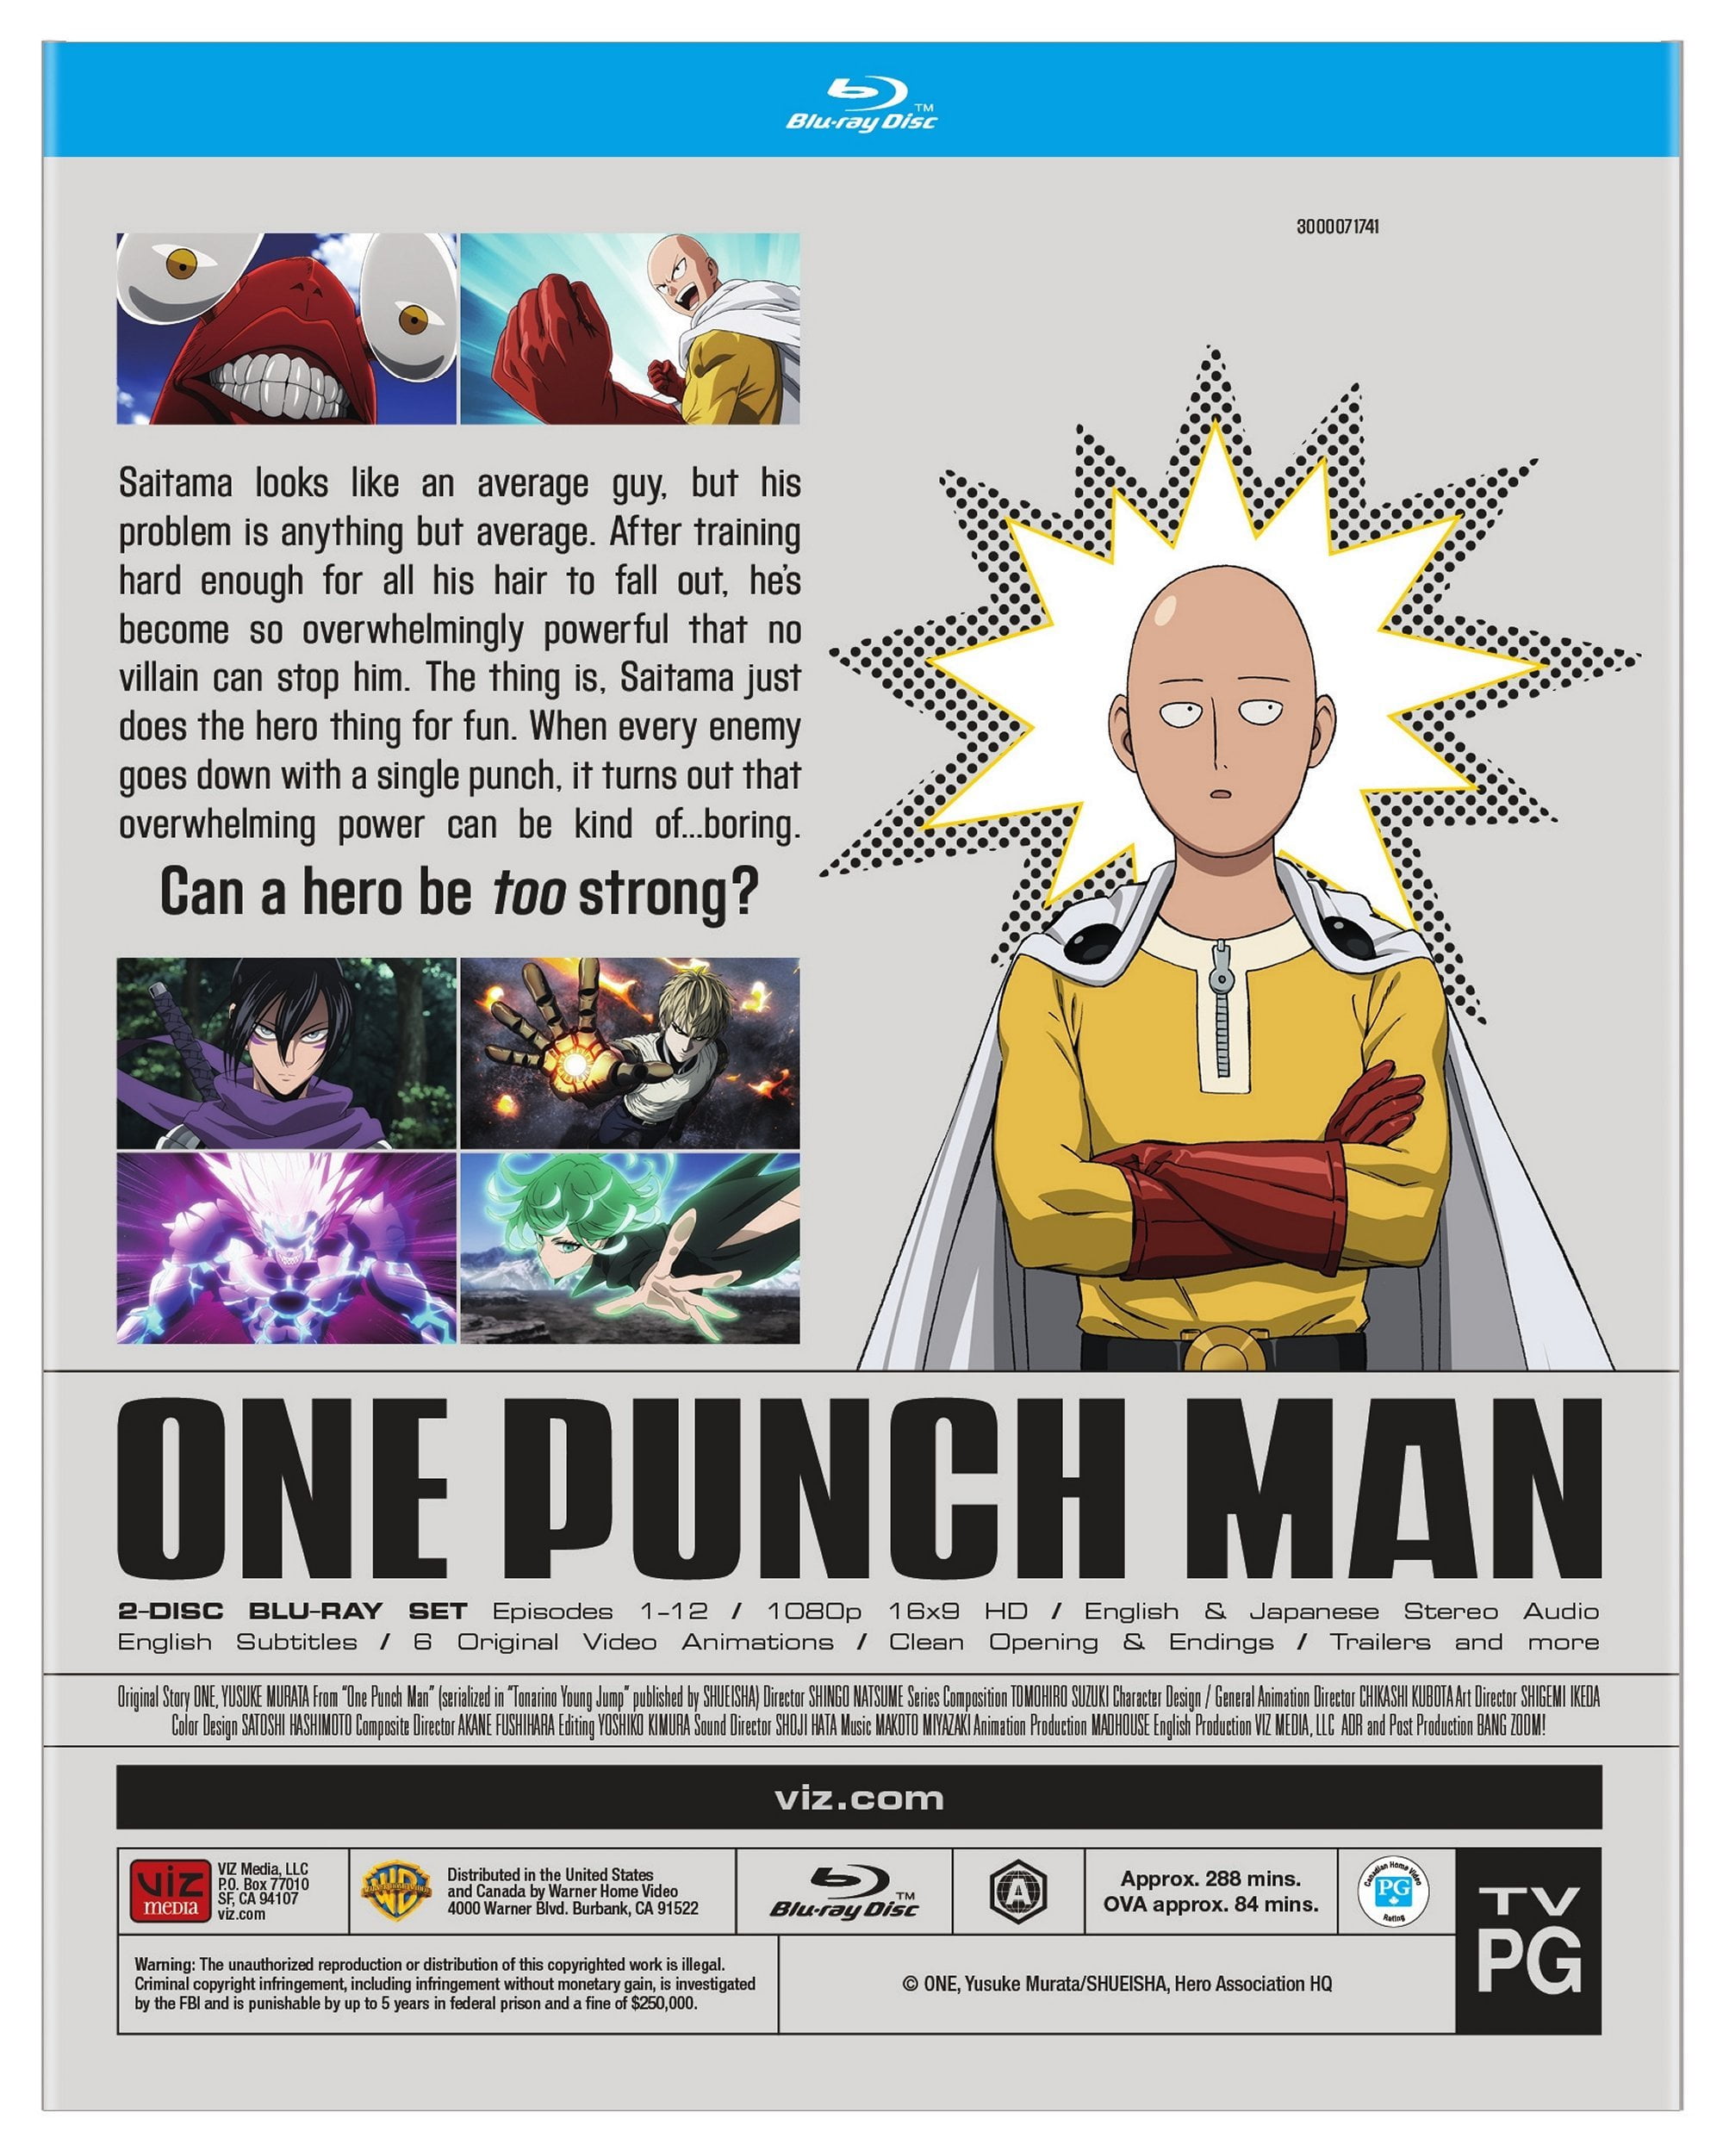 DVD & Blu-ray: ONE-PUNCH MAN Season 2 - Contains Episodes 13-24 + 6 OVAs